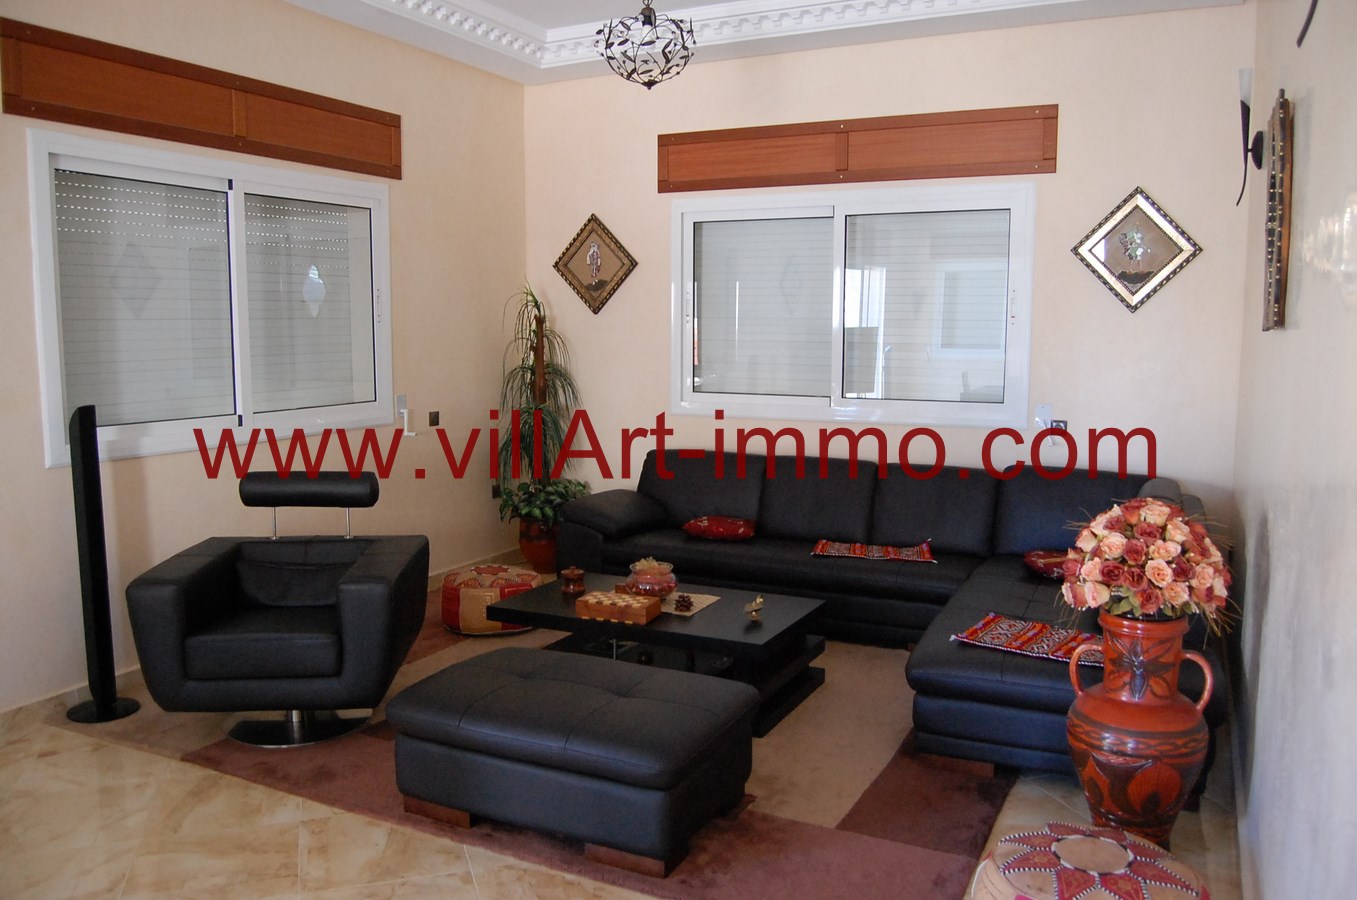 5-location-villa-meuble-tanger-achakar-salon-1-lv872-villart-immo